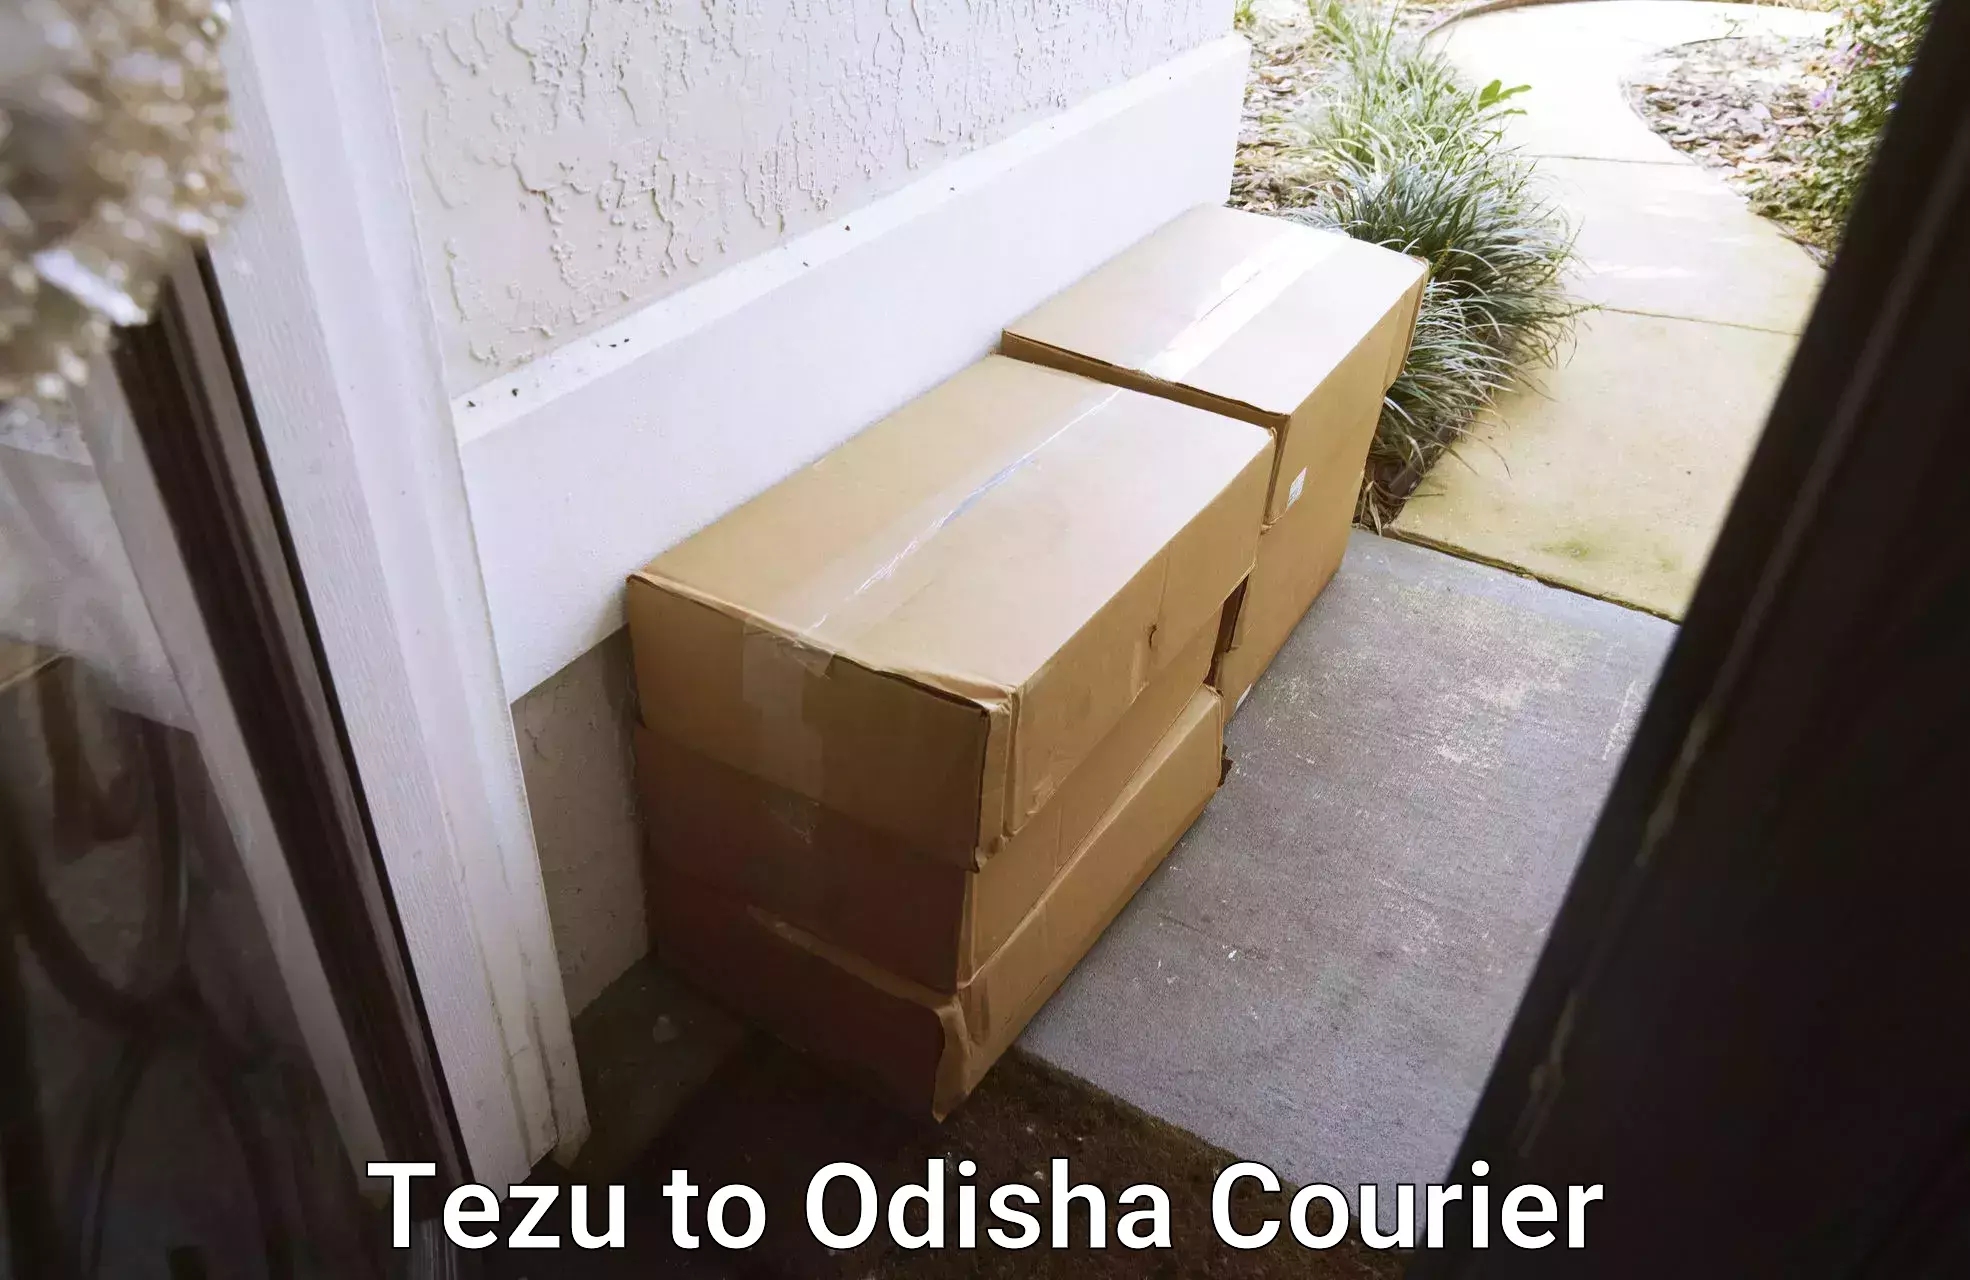 High-speed parcel service Tezu to Odisha